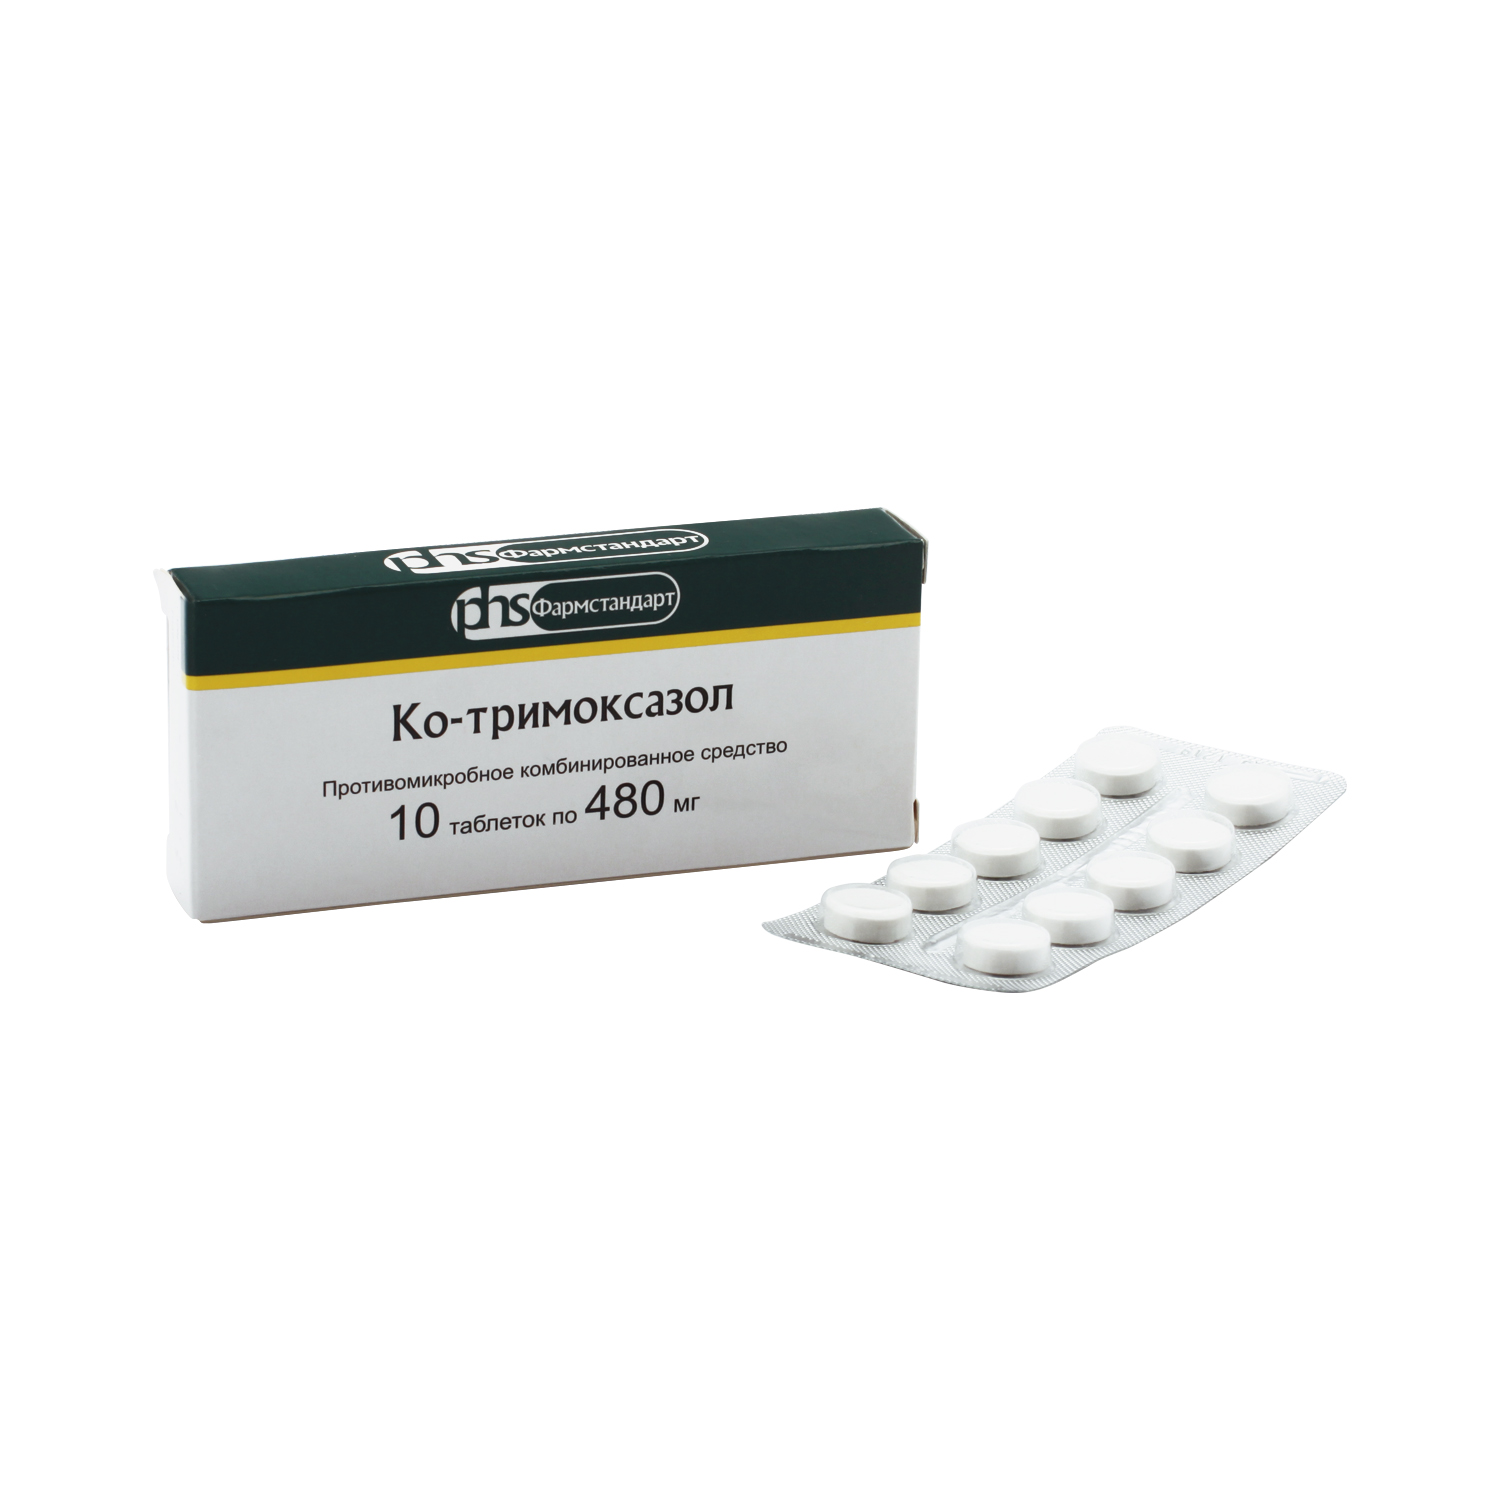 Ко-тримоксазол таблетки 480 мг 10 шт  по цене 27,0 руб в интернет .